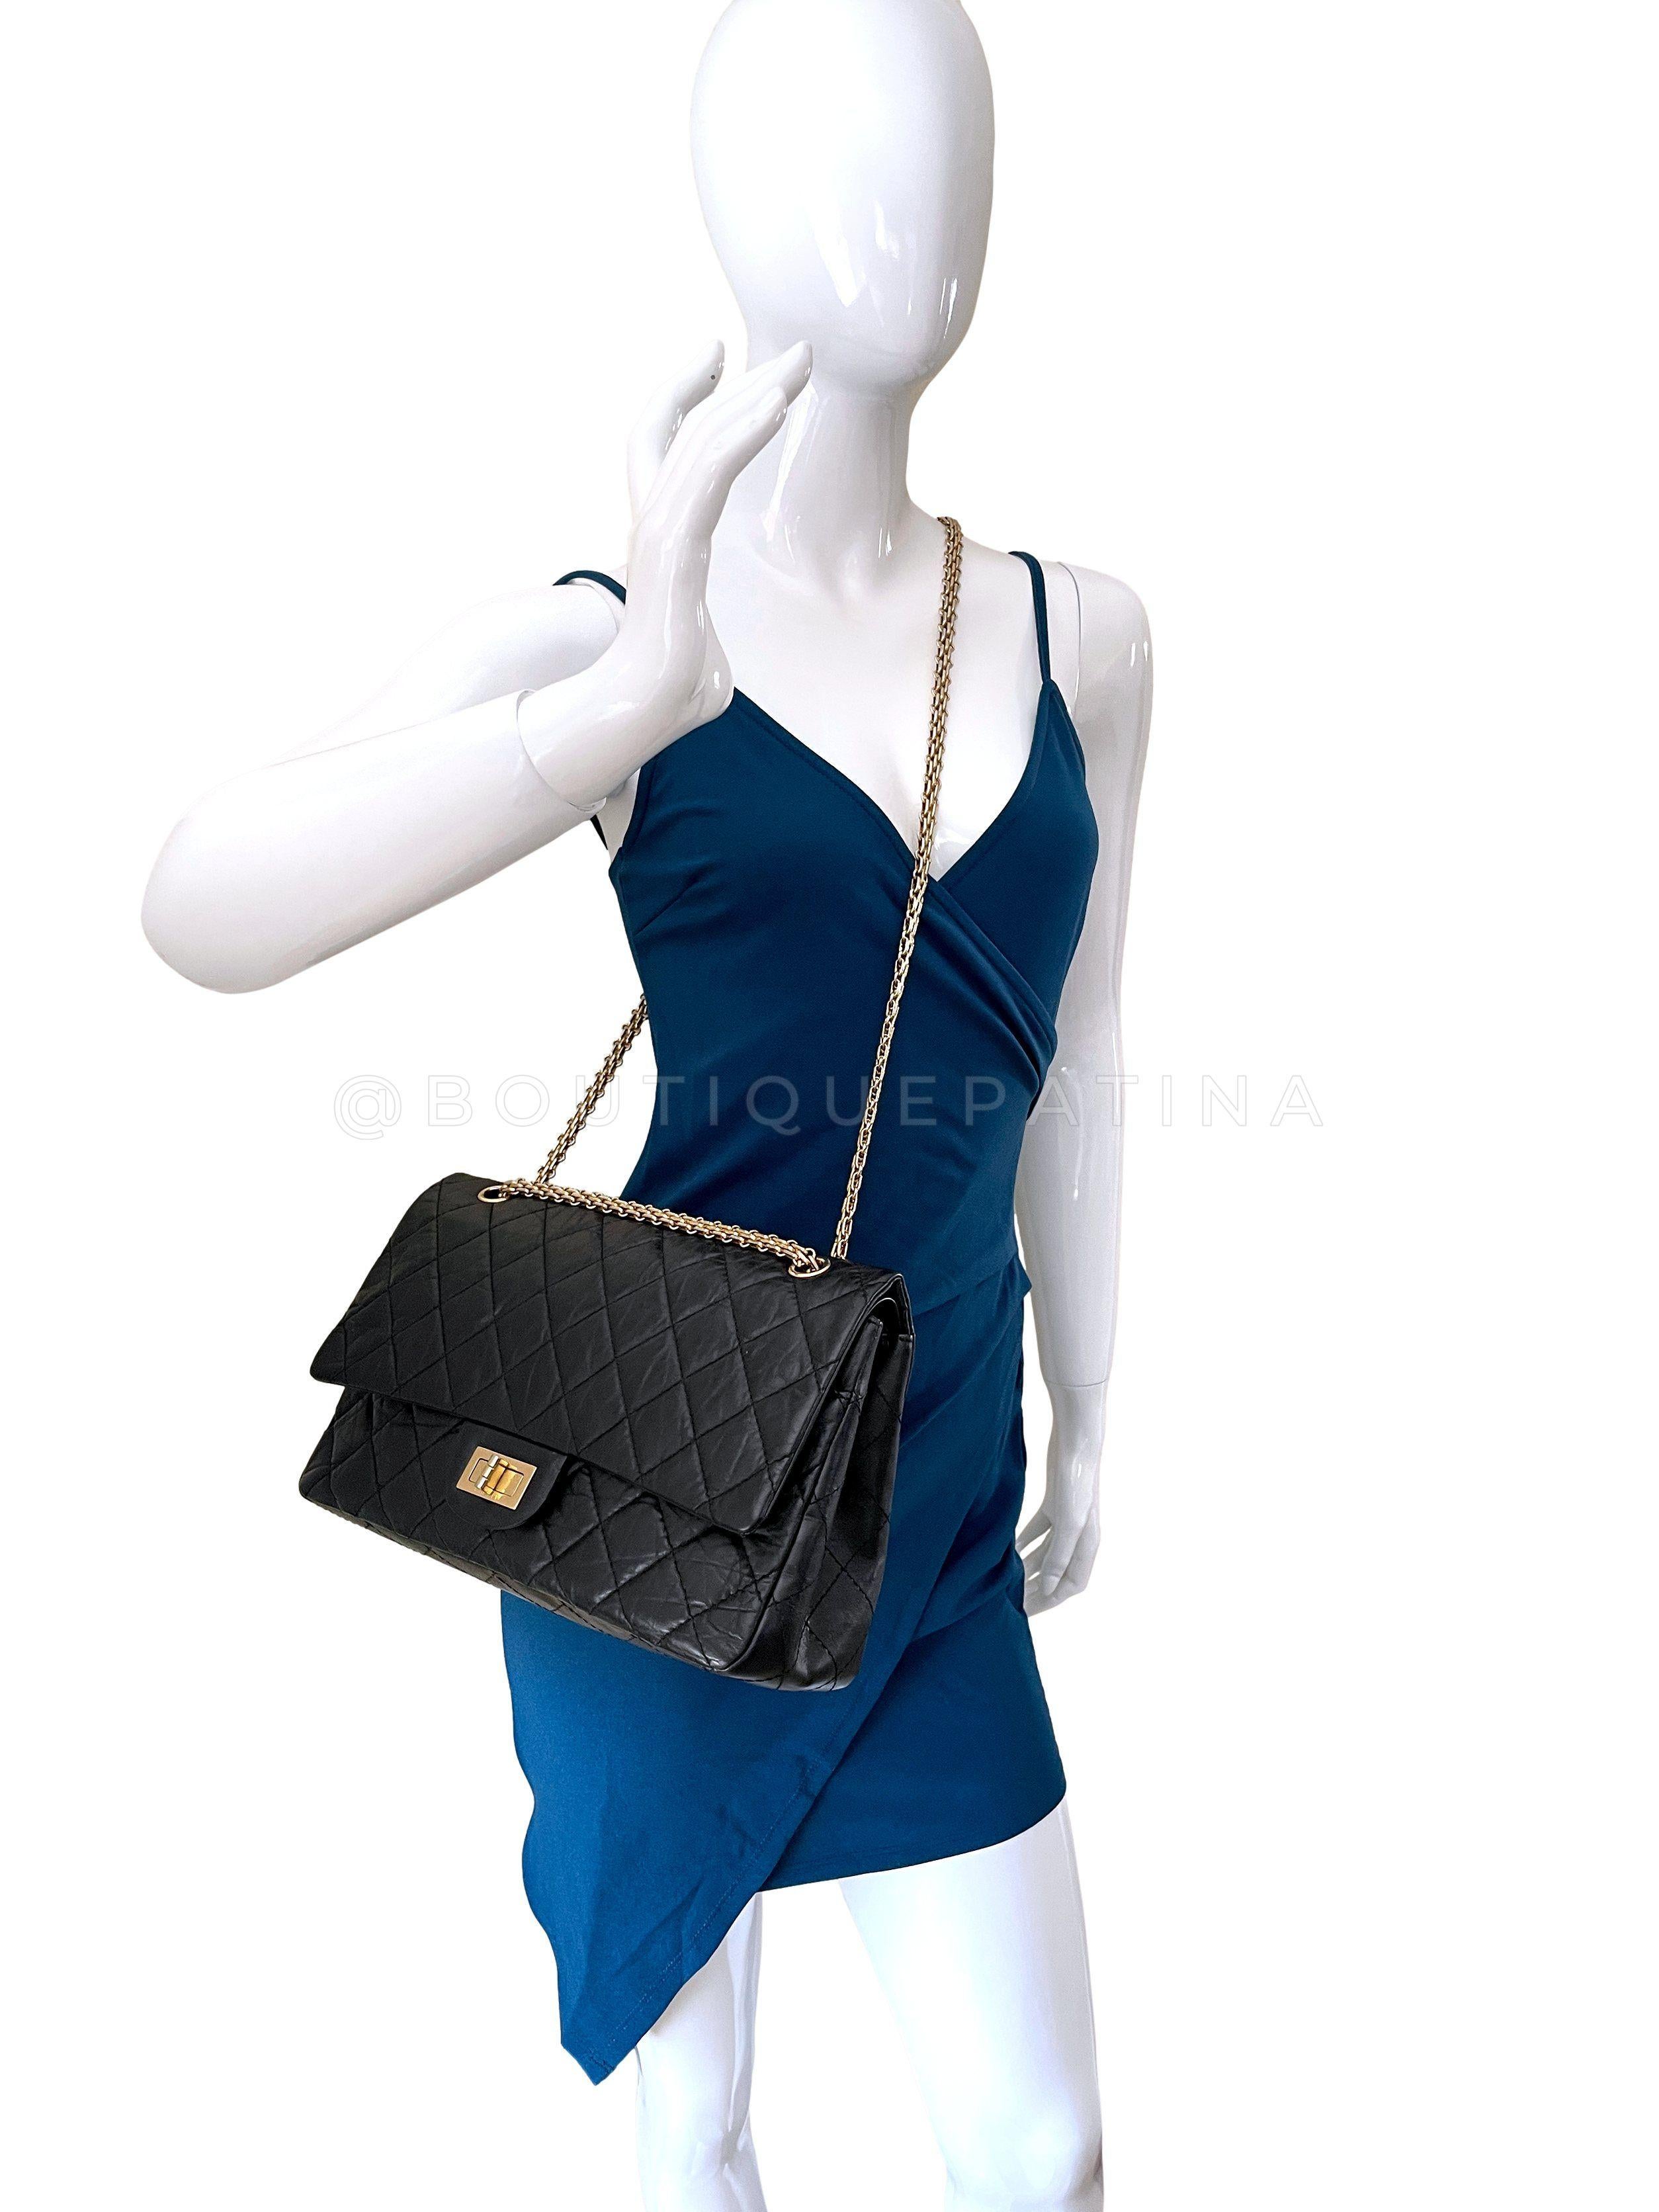 Chanel Black Aged Calfskin Reissue Large 227 2.55 Flap Bag GHW 65332 For Sale 10